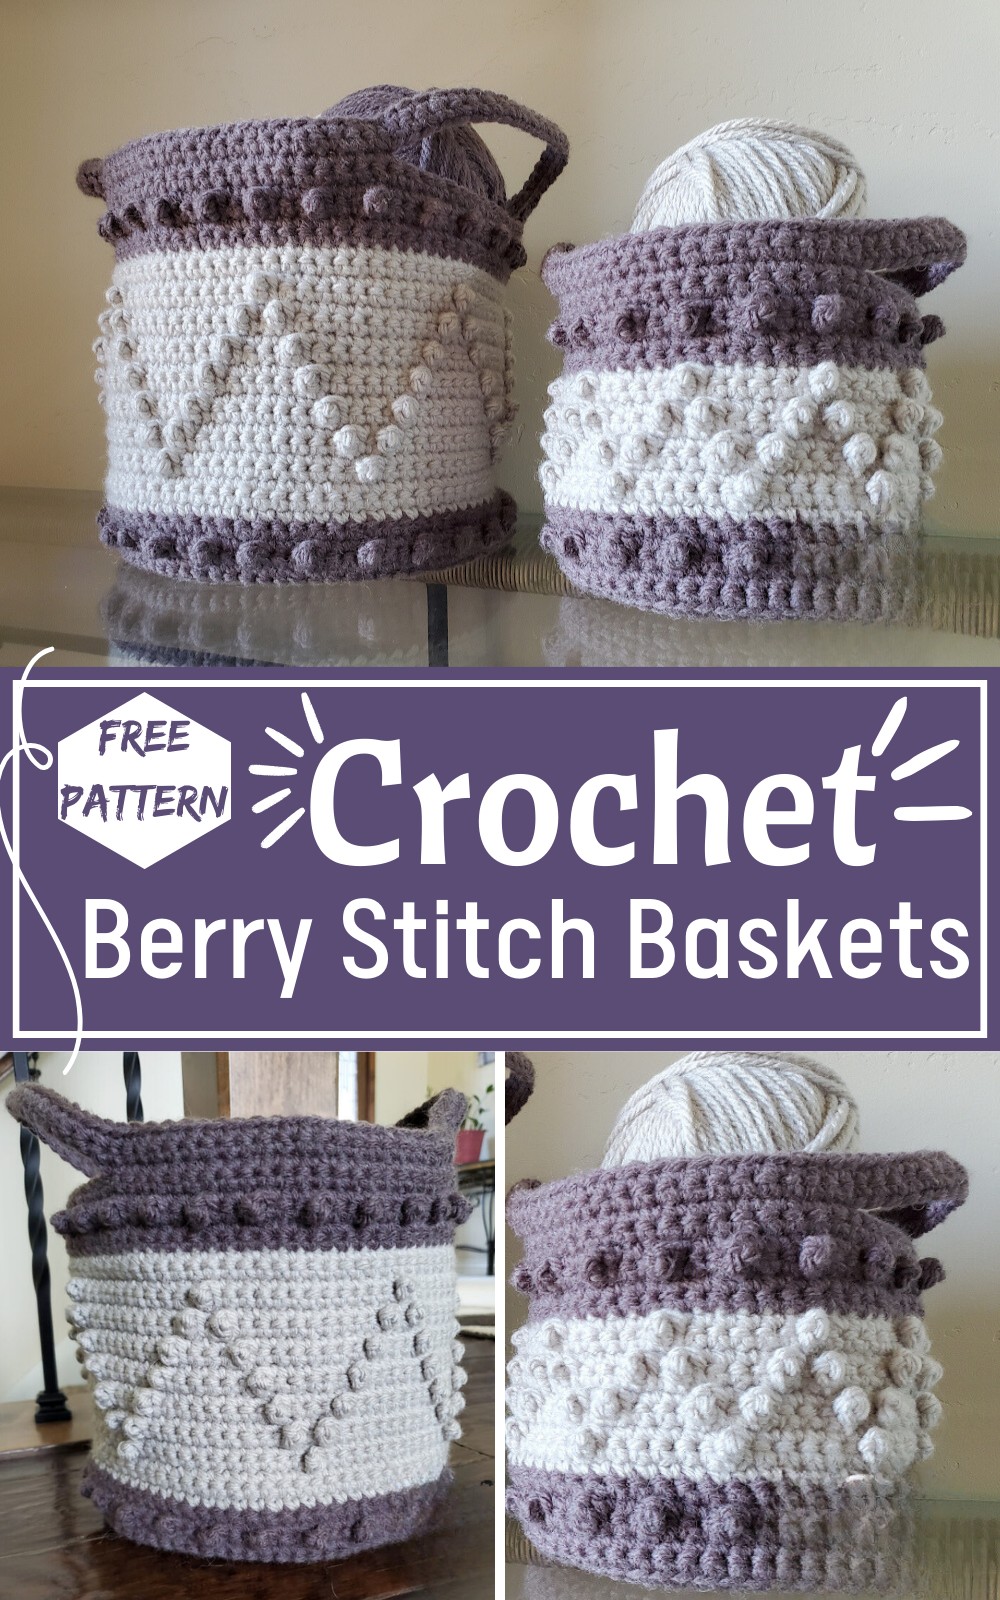 Crochet Berry Stitch Baskets